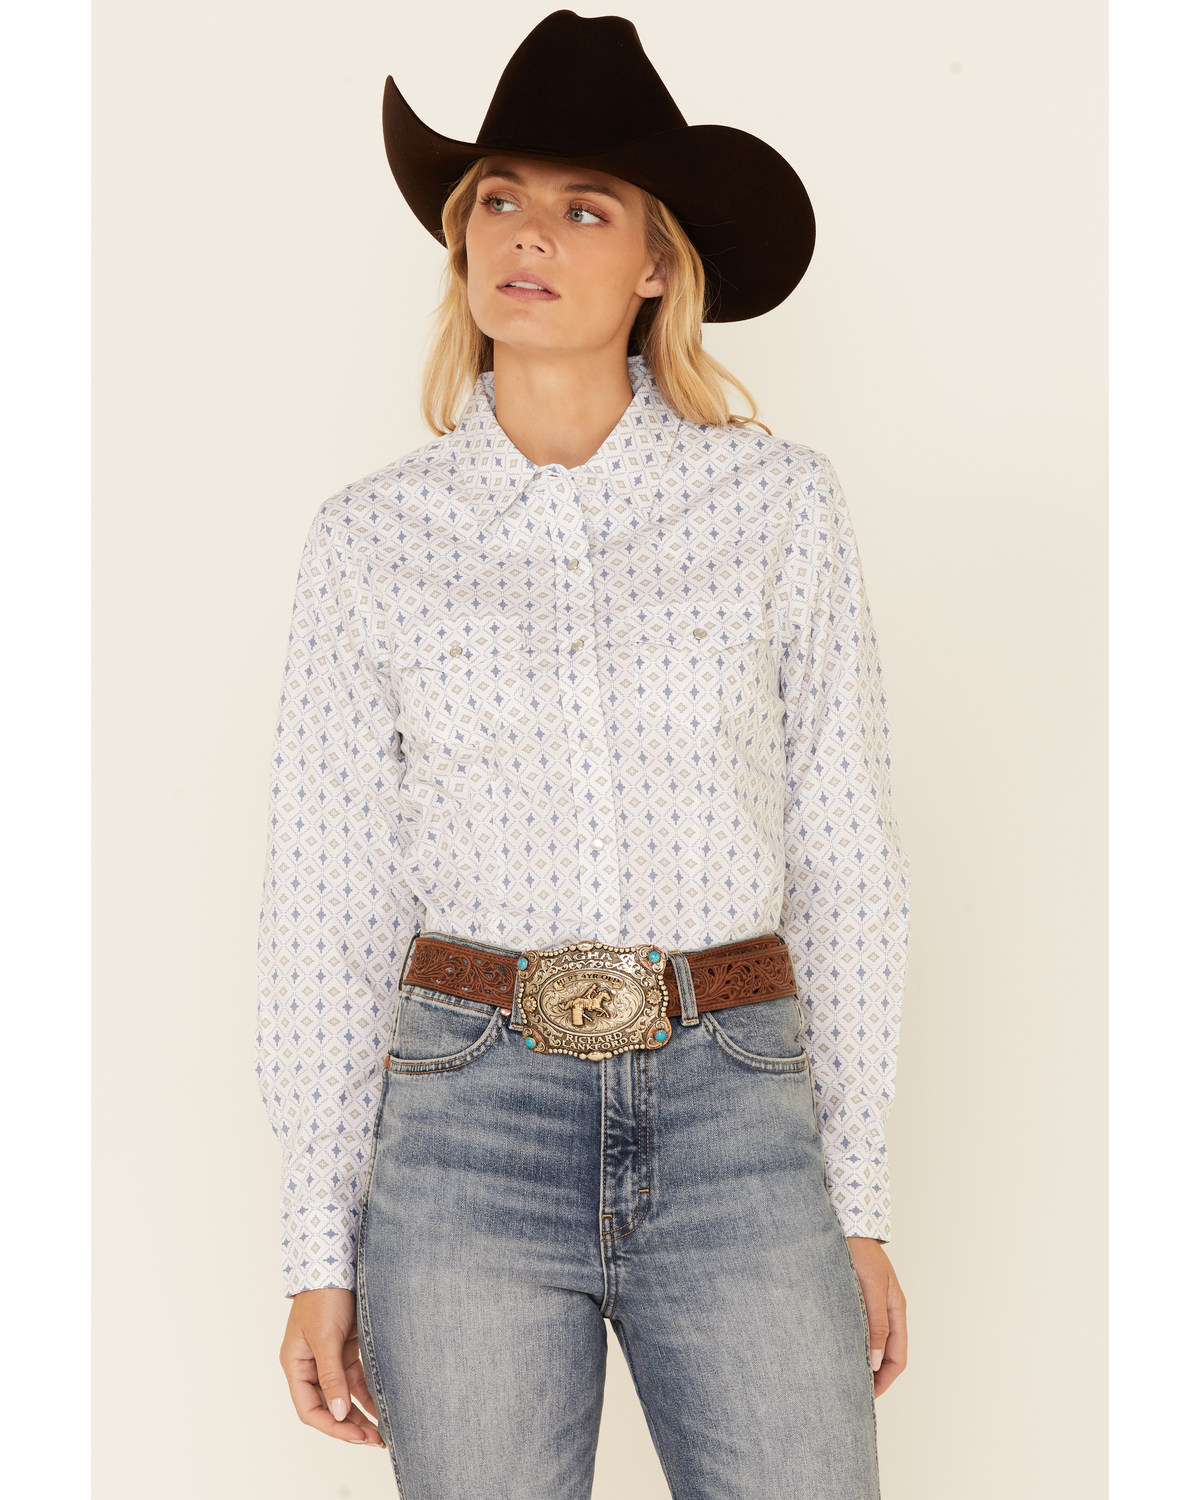 Ely Walker Women's Southwestern Tile Print Long Sleeve Pearl Snap Western Shirt